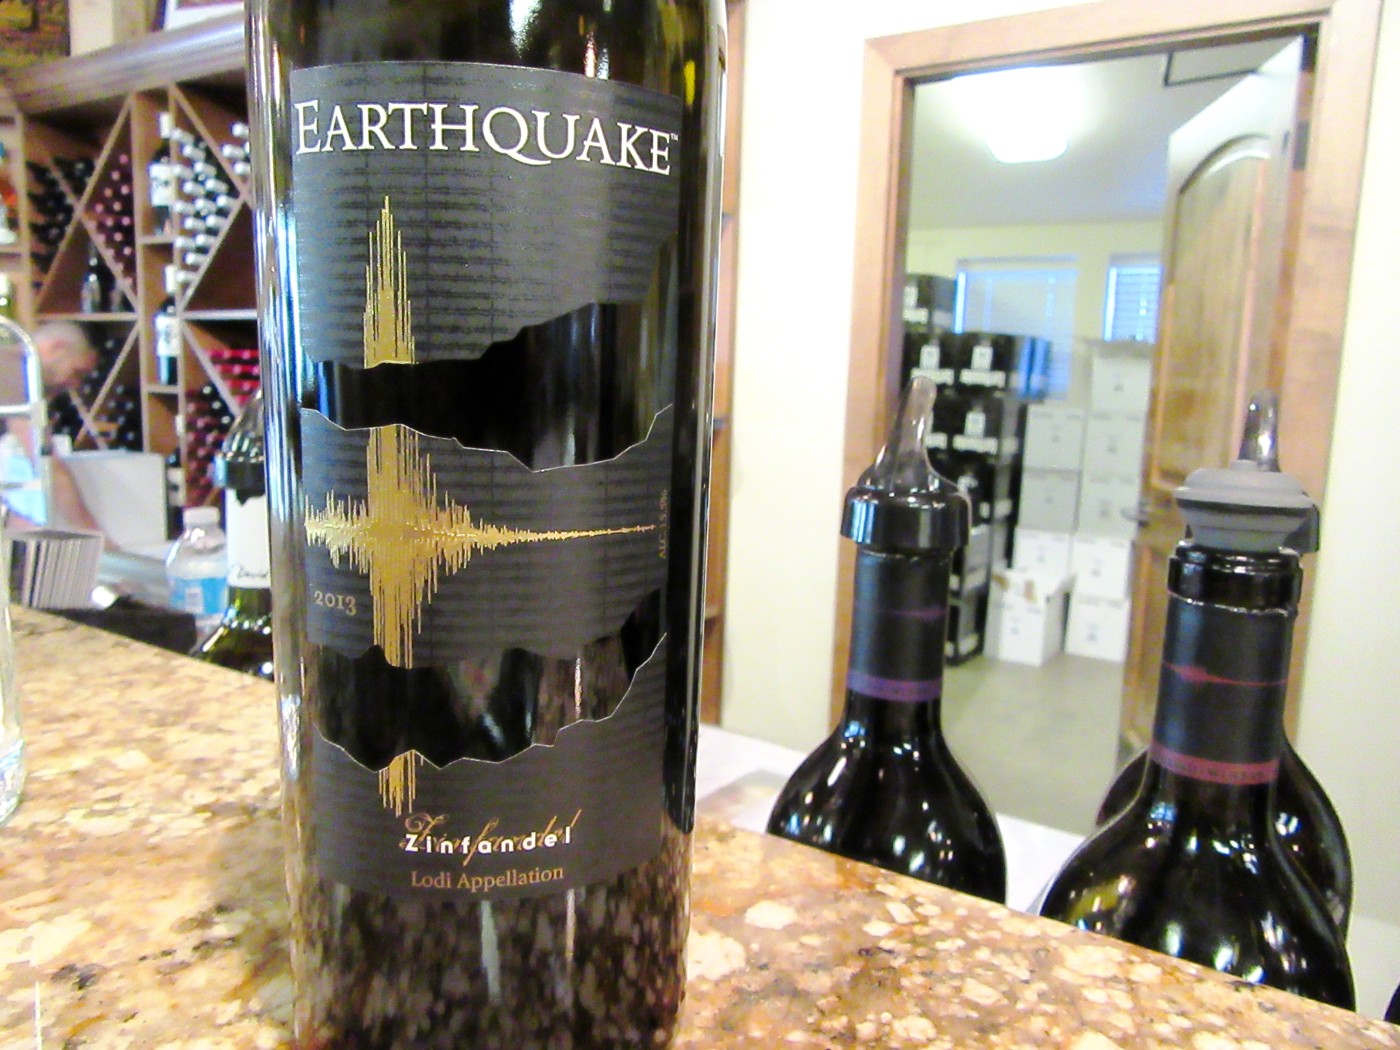 Michael David Winery, Earthquake Zinfandel 2013, Lodi, California, Wine Casual